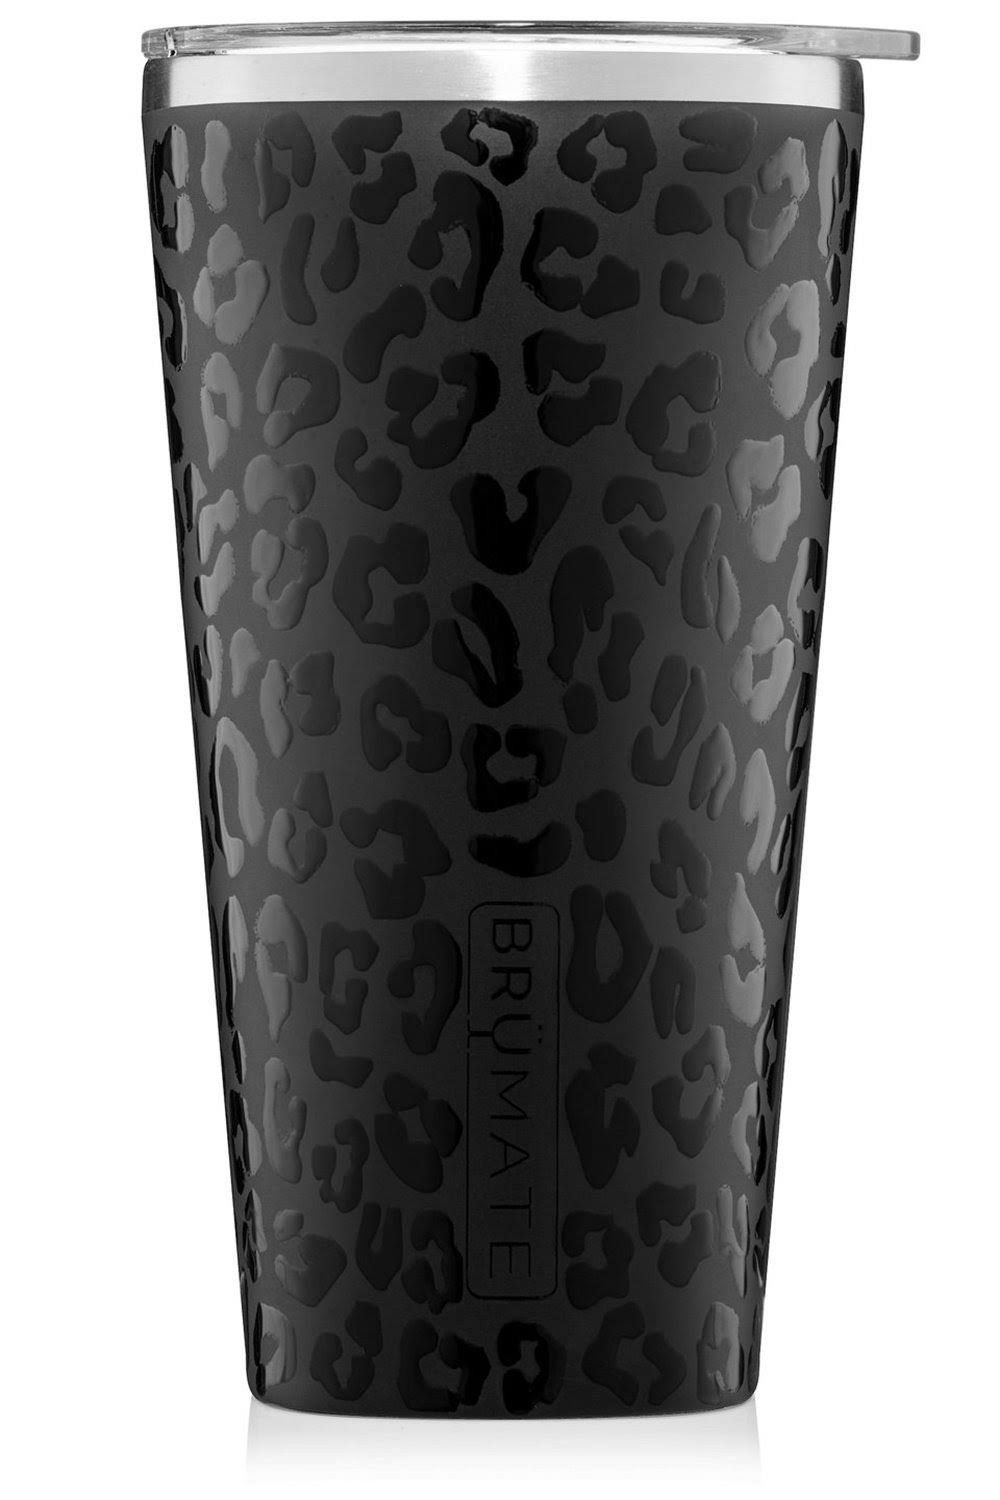 Brumate Imperial Pint | 20 oz - Onyx Leopard